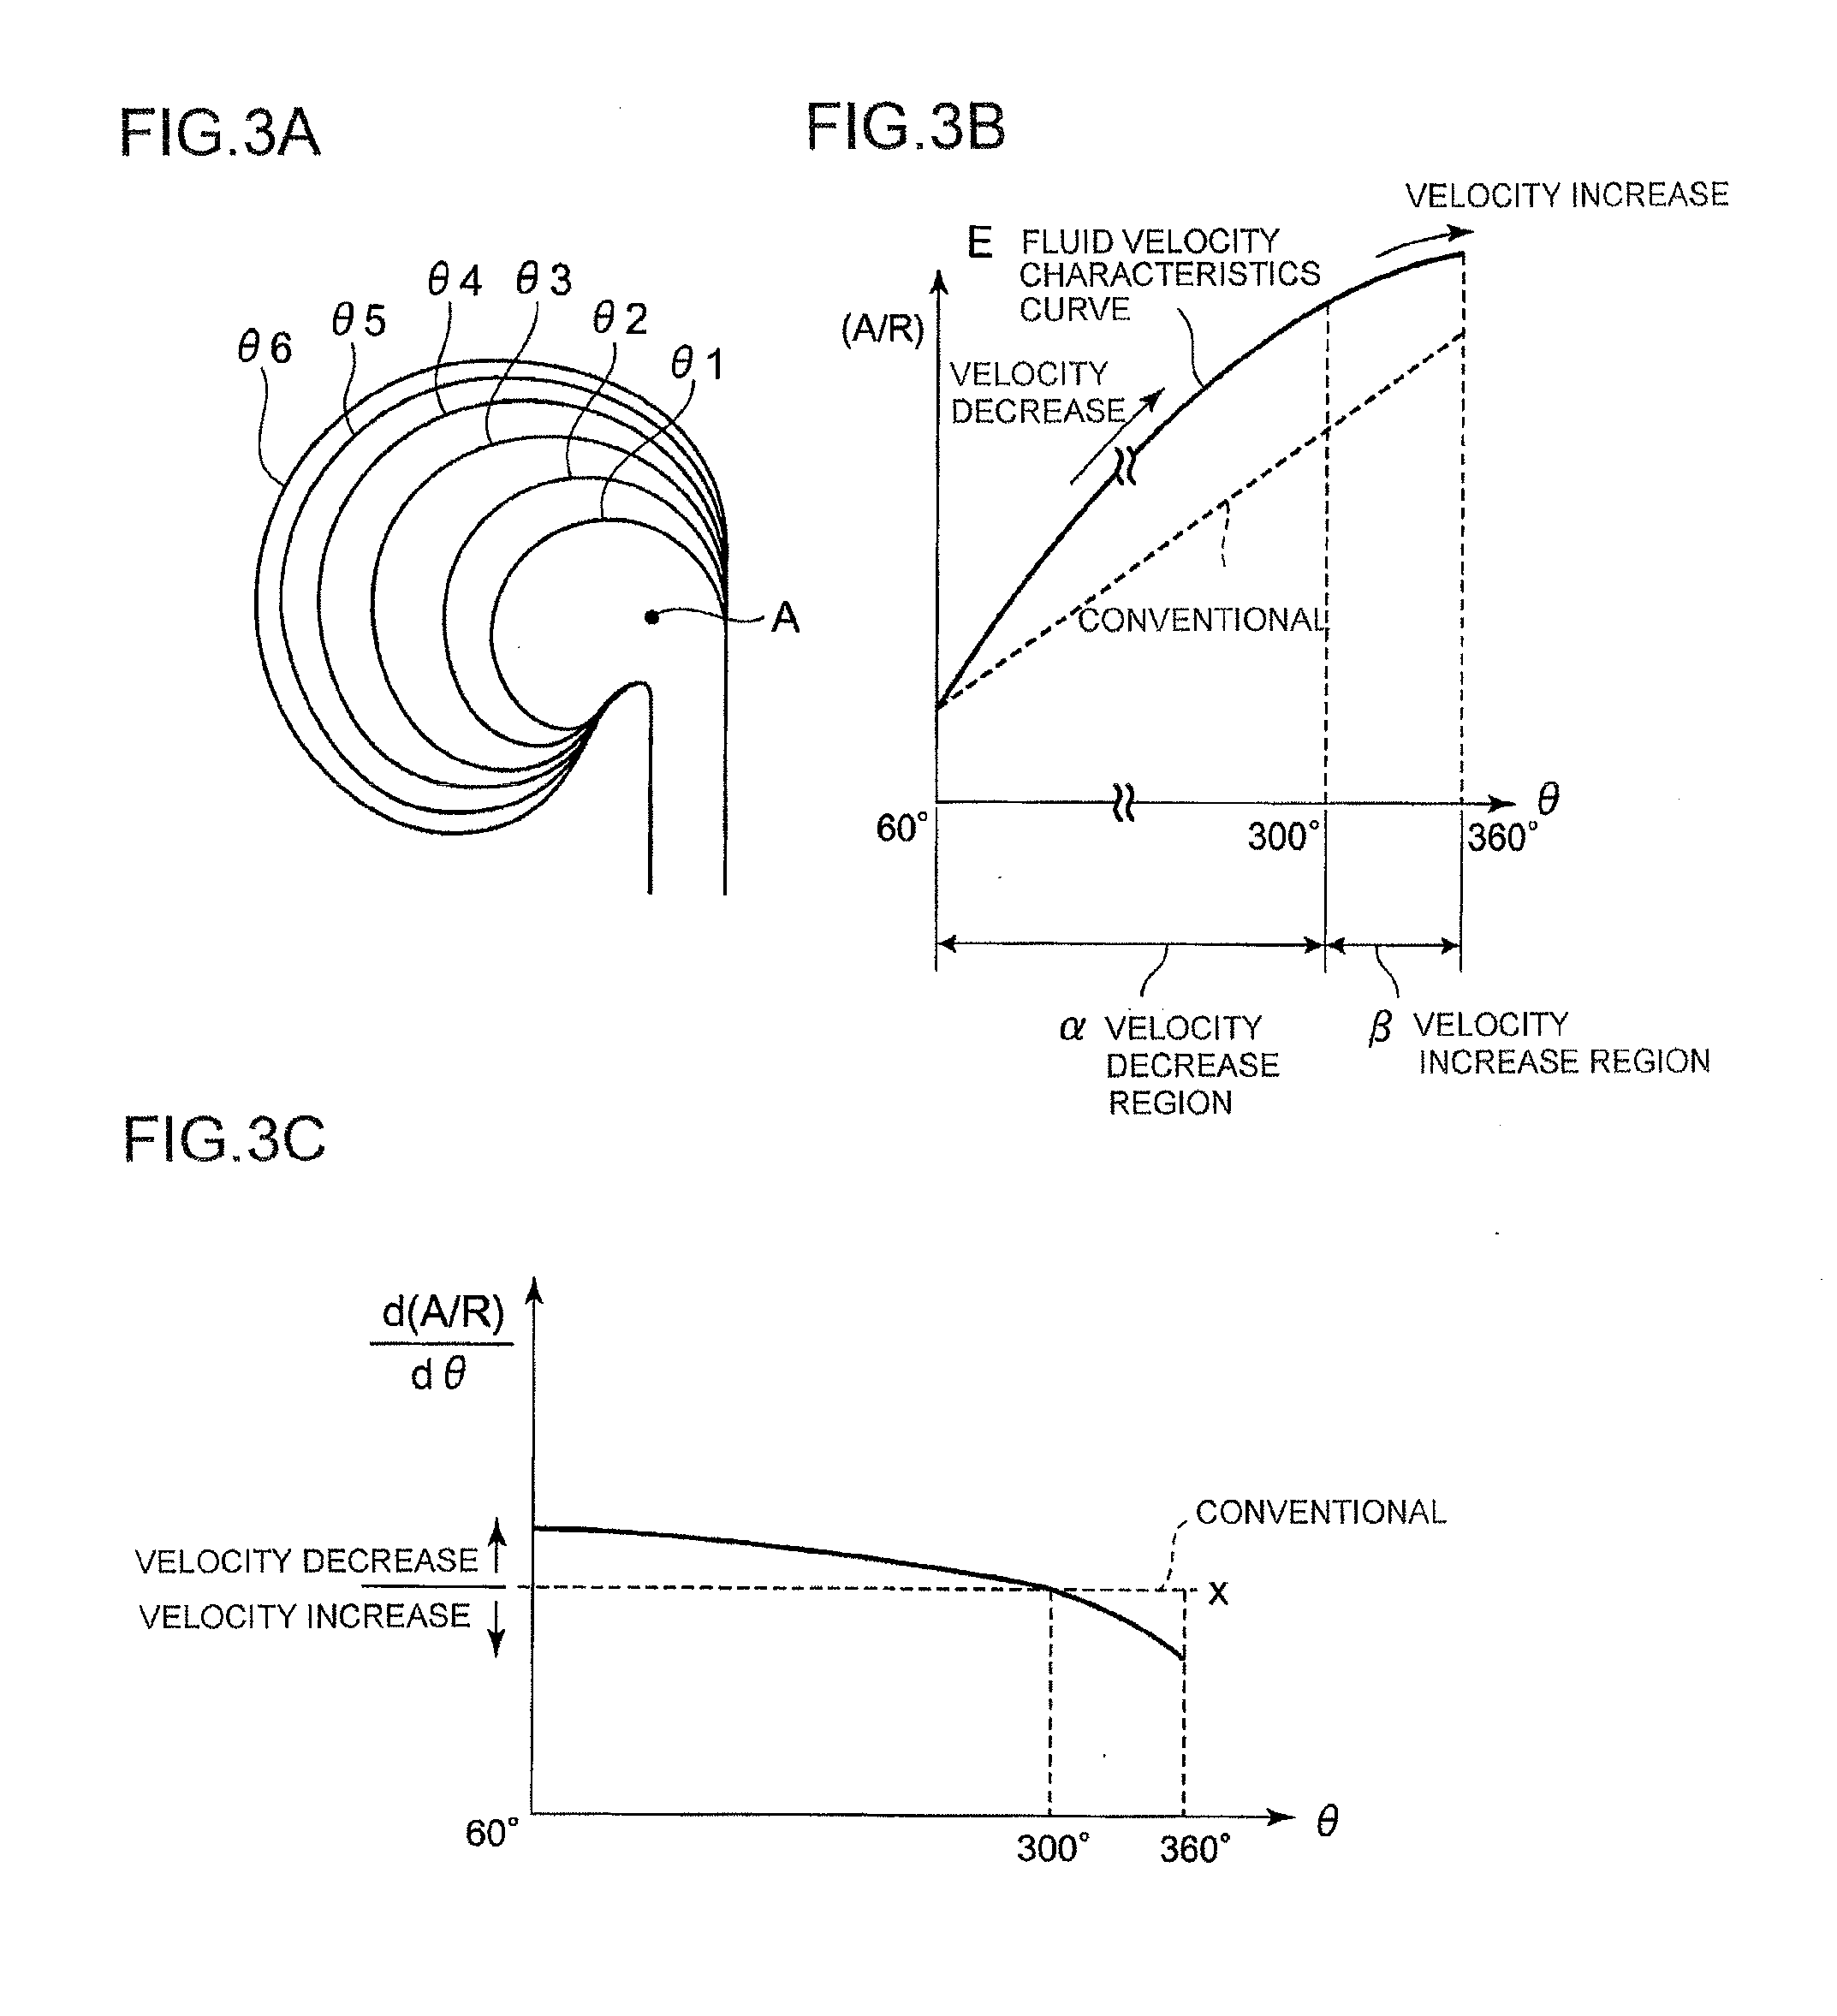 Scroll shape of centrifugal compressor